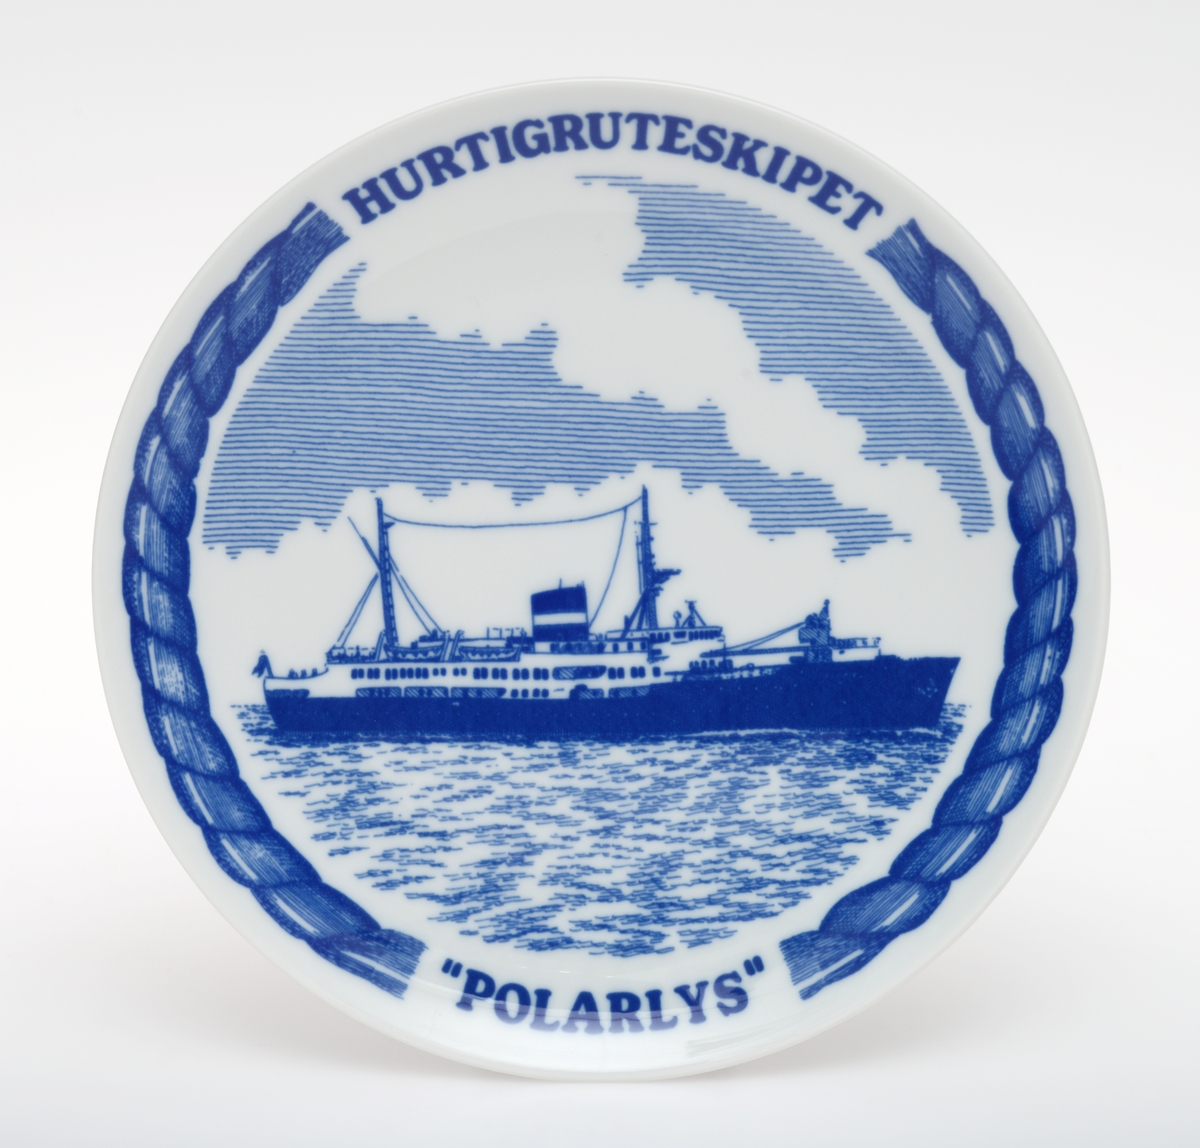 Motiv av Hurtigruten M/S Polarlys.